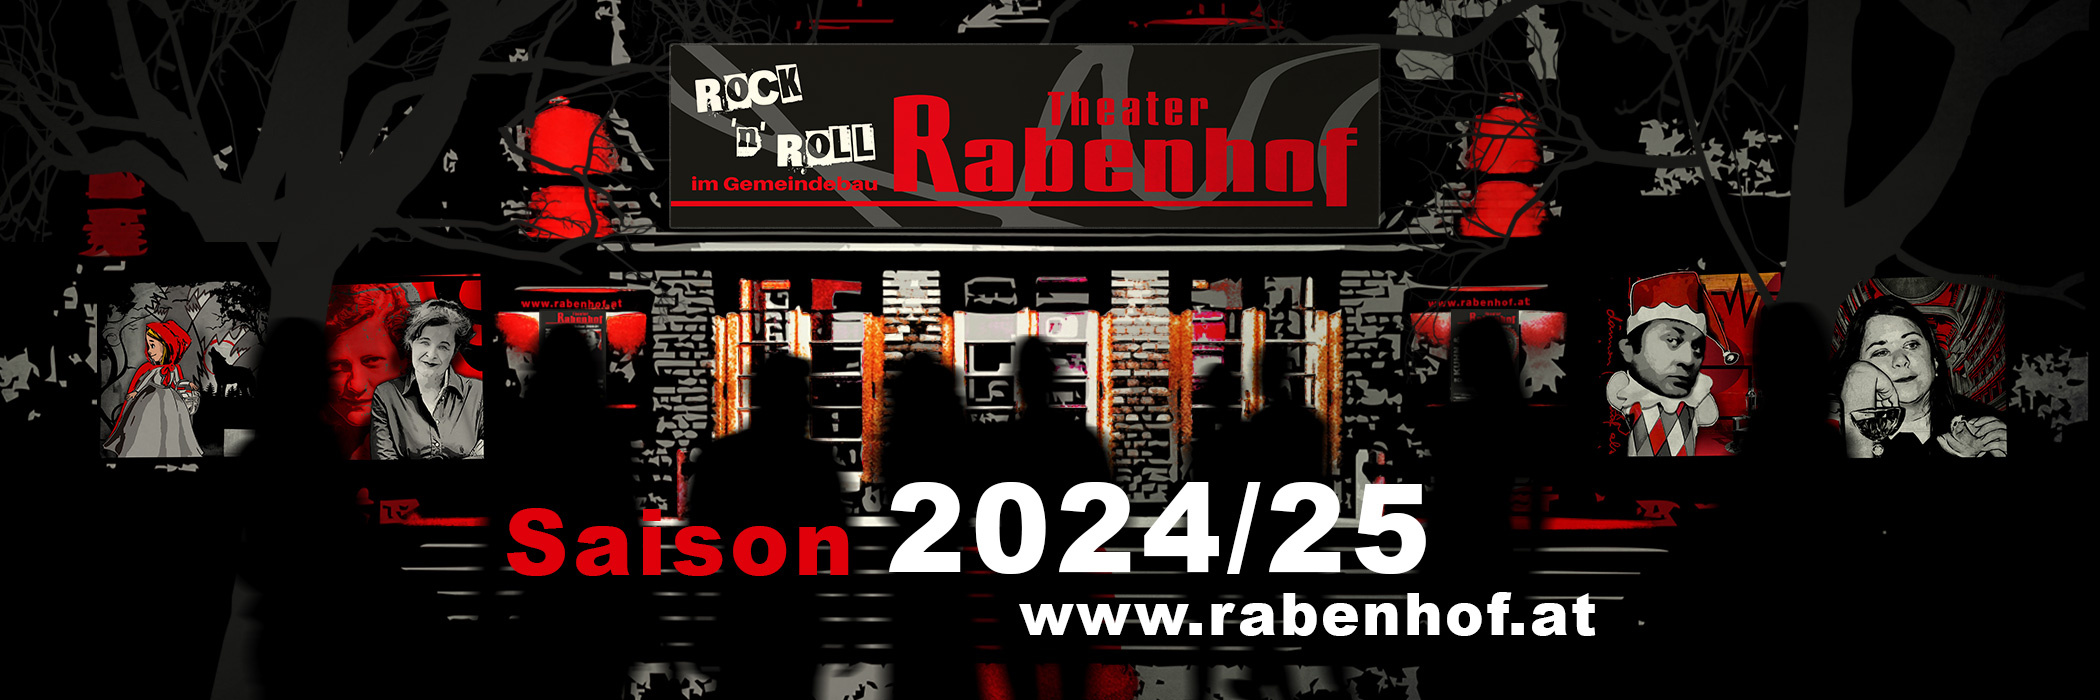 Rabenhof Theater | Saison 2024/25